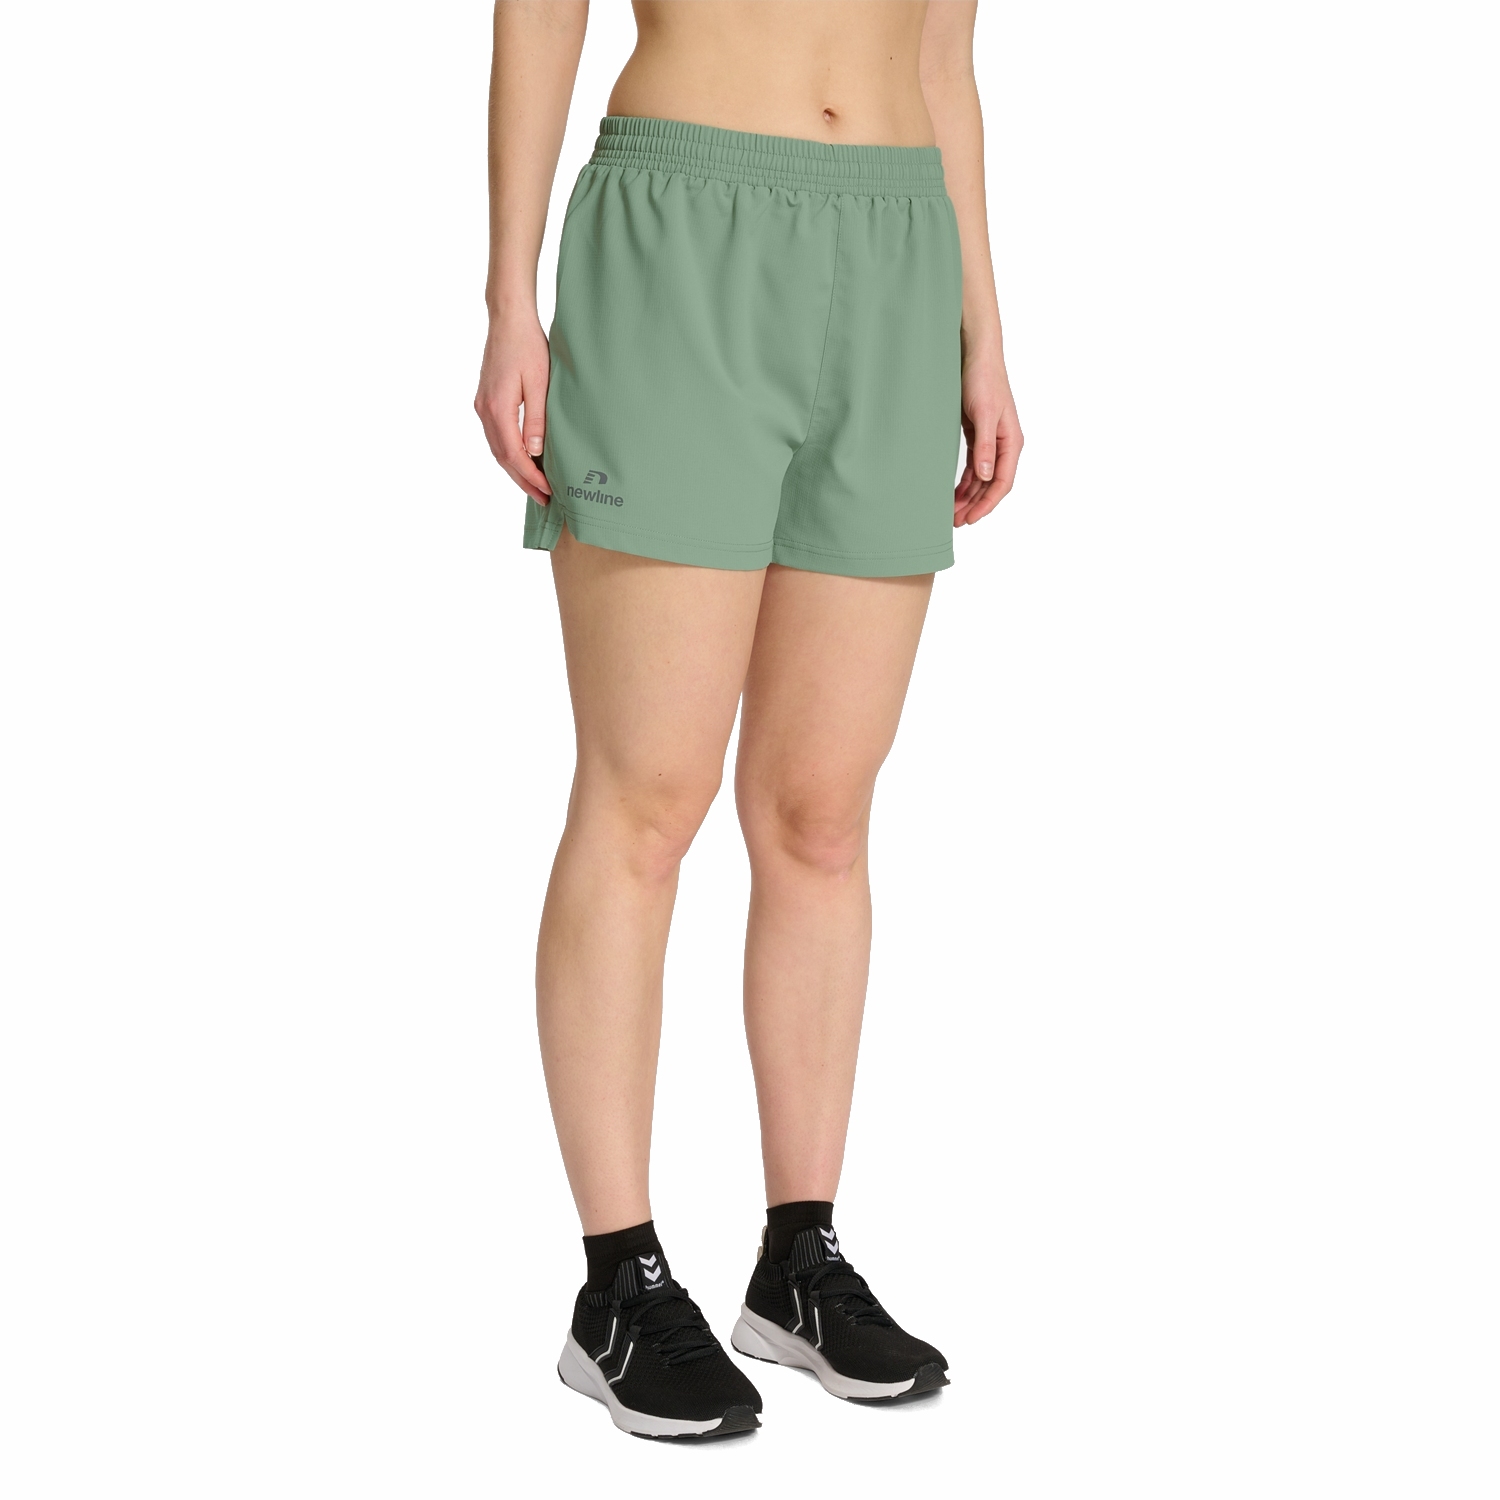 Productfoto van Newline Dallas Dames Shorts - green bay